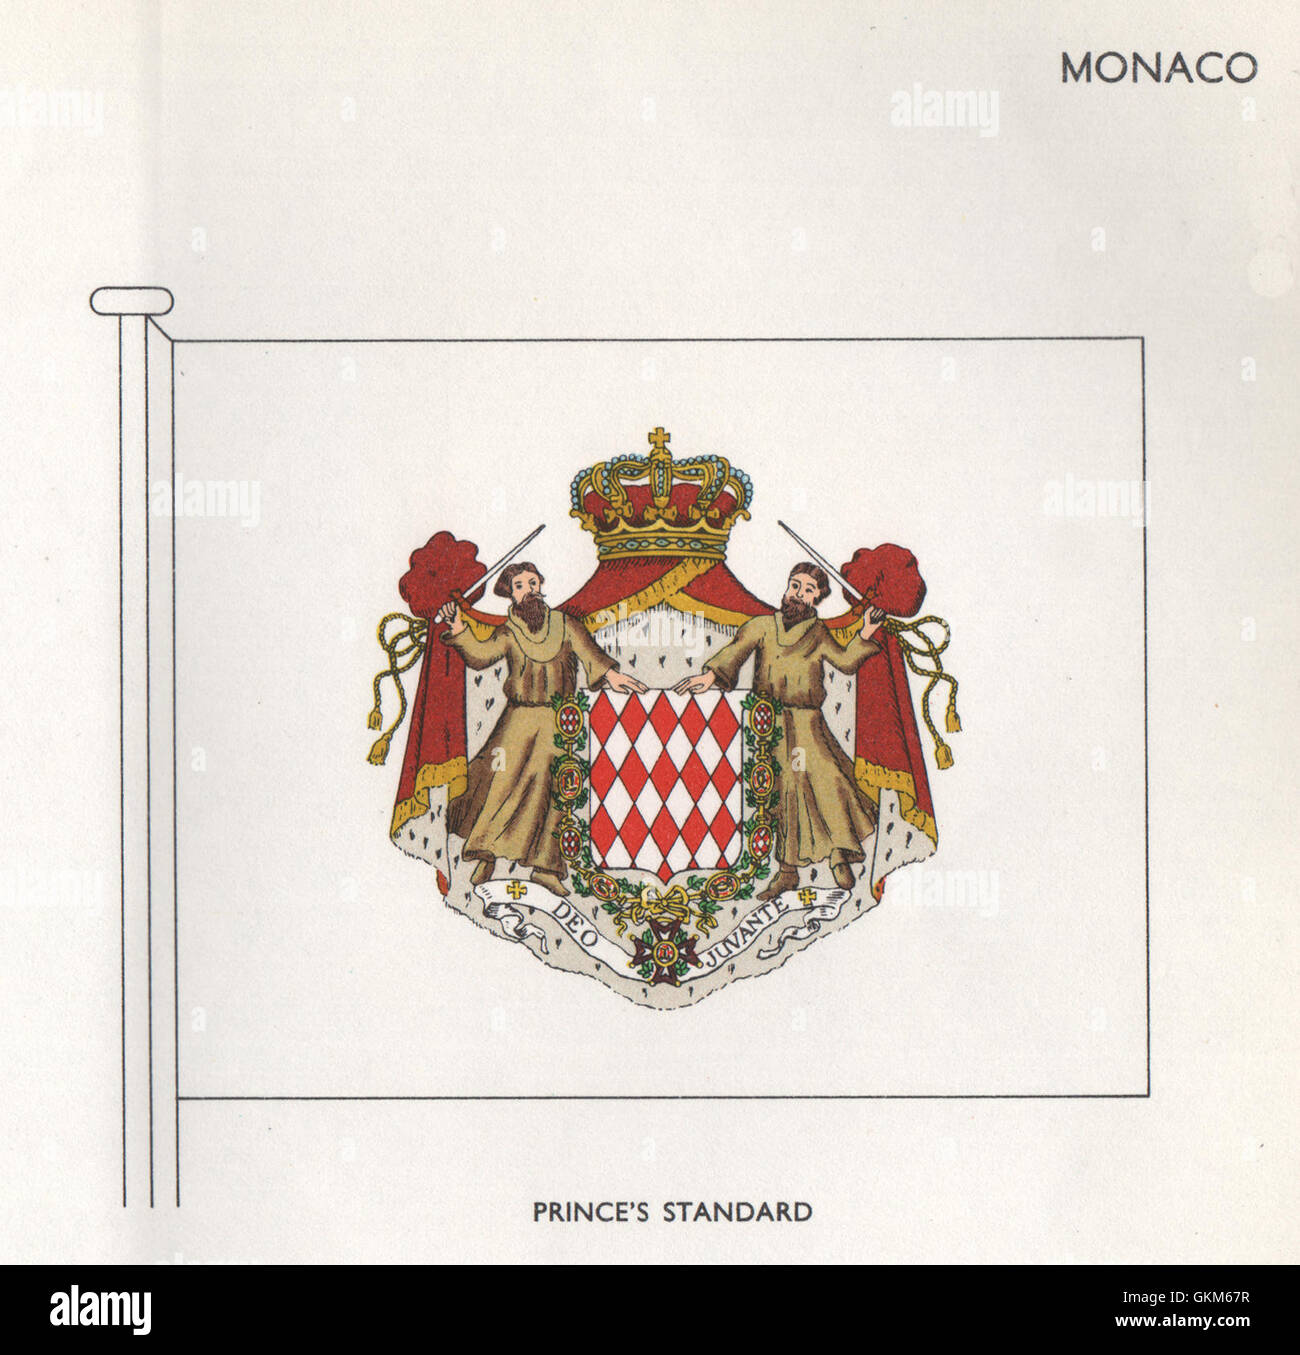 MONACO FLAGGEN. Des Prinzen Standard, Jahrgang 1958 drucken Stockfoto